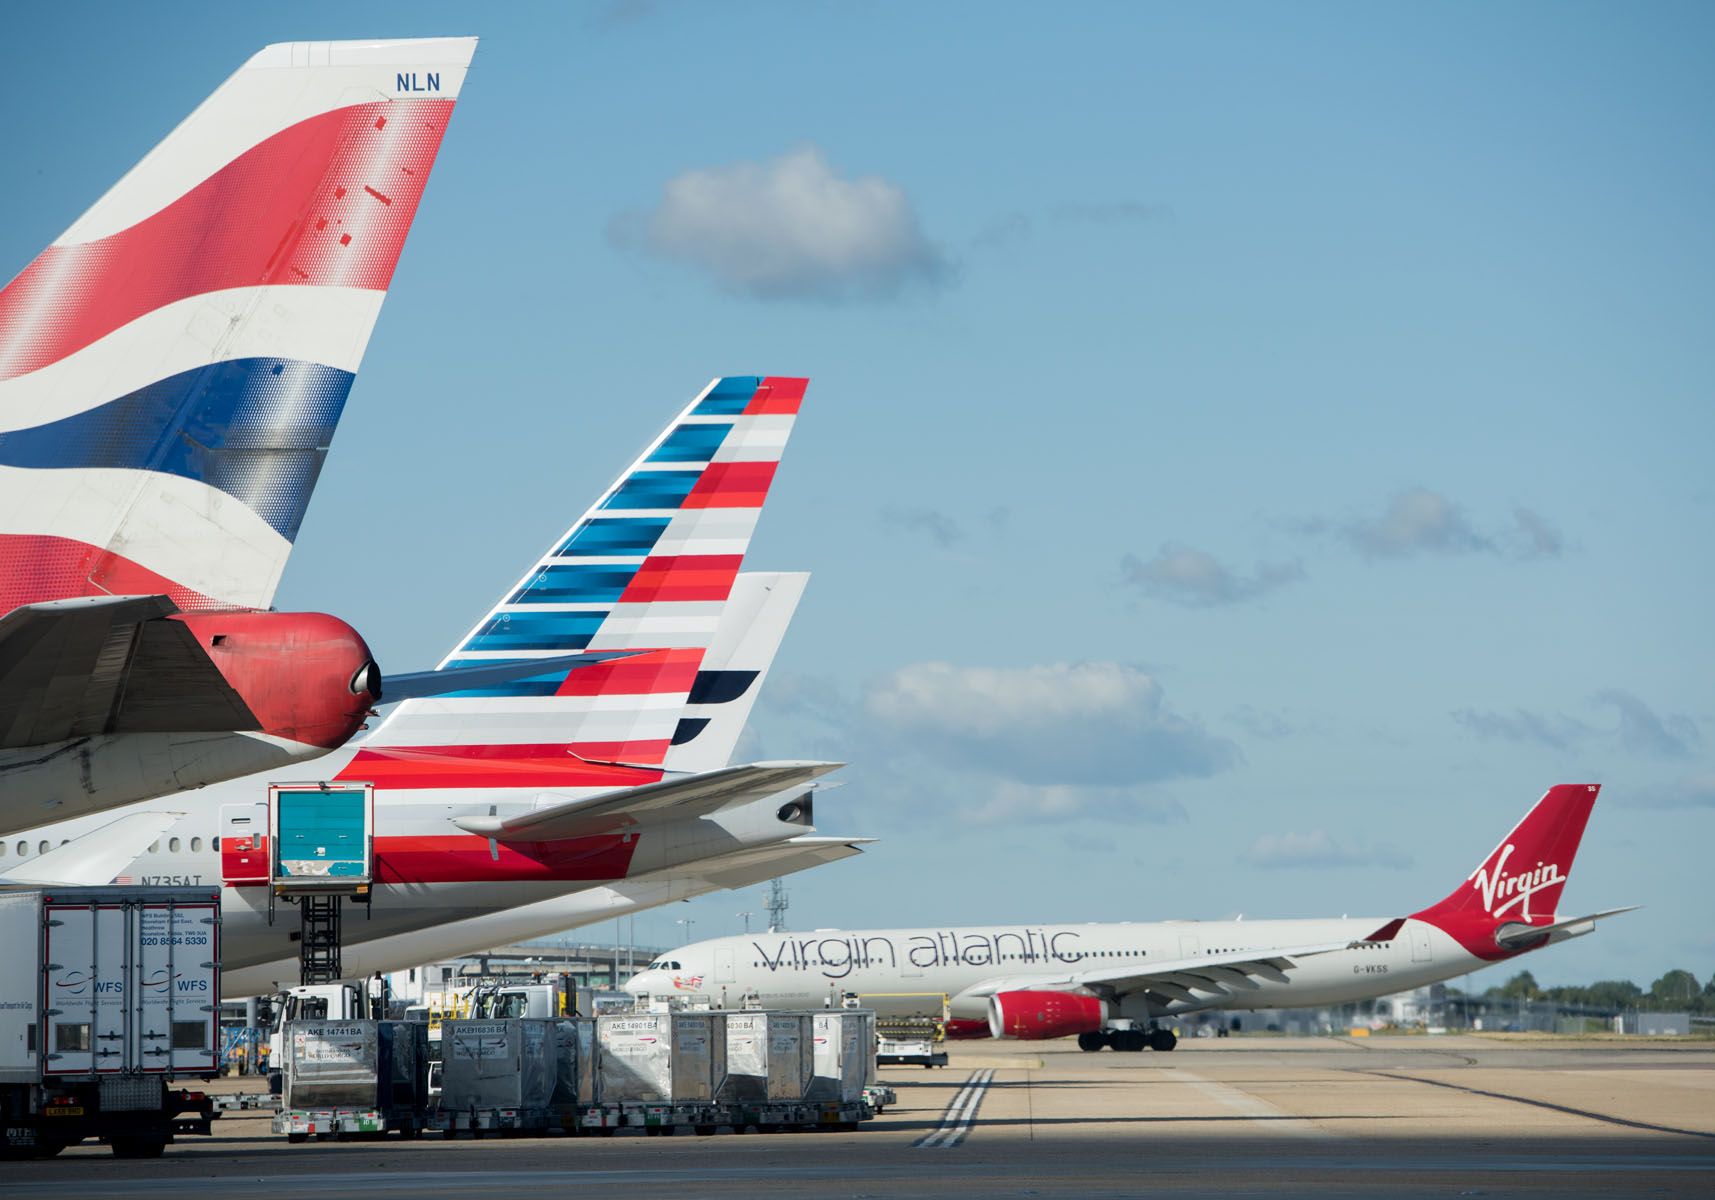 British Airways, American Airlines, and Virgin Atlantic aircraft at London Heathrow Airport.